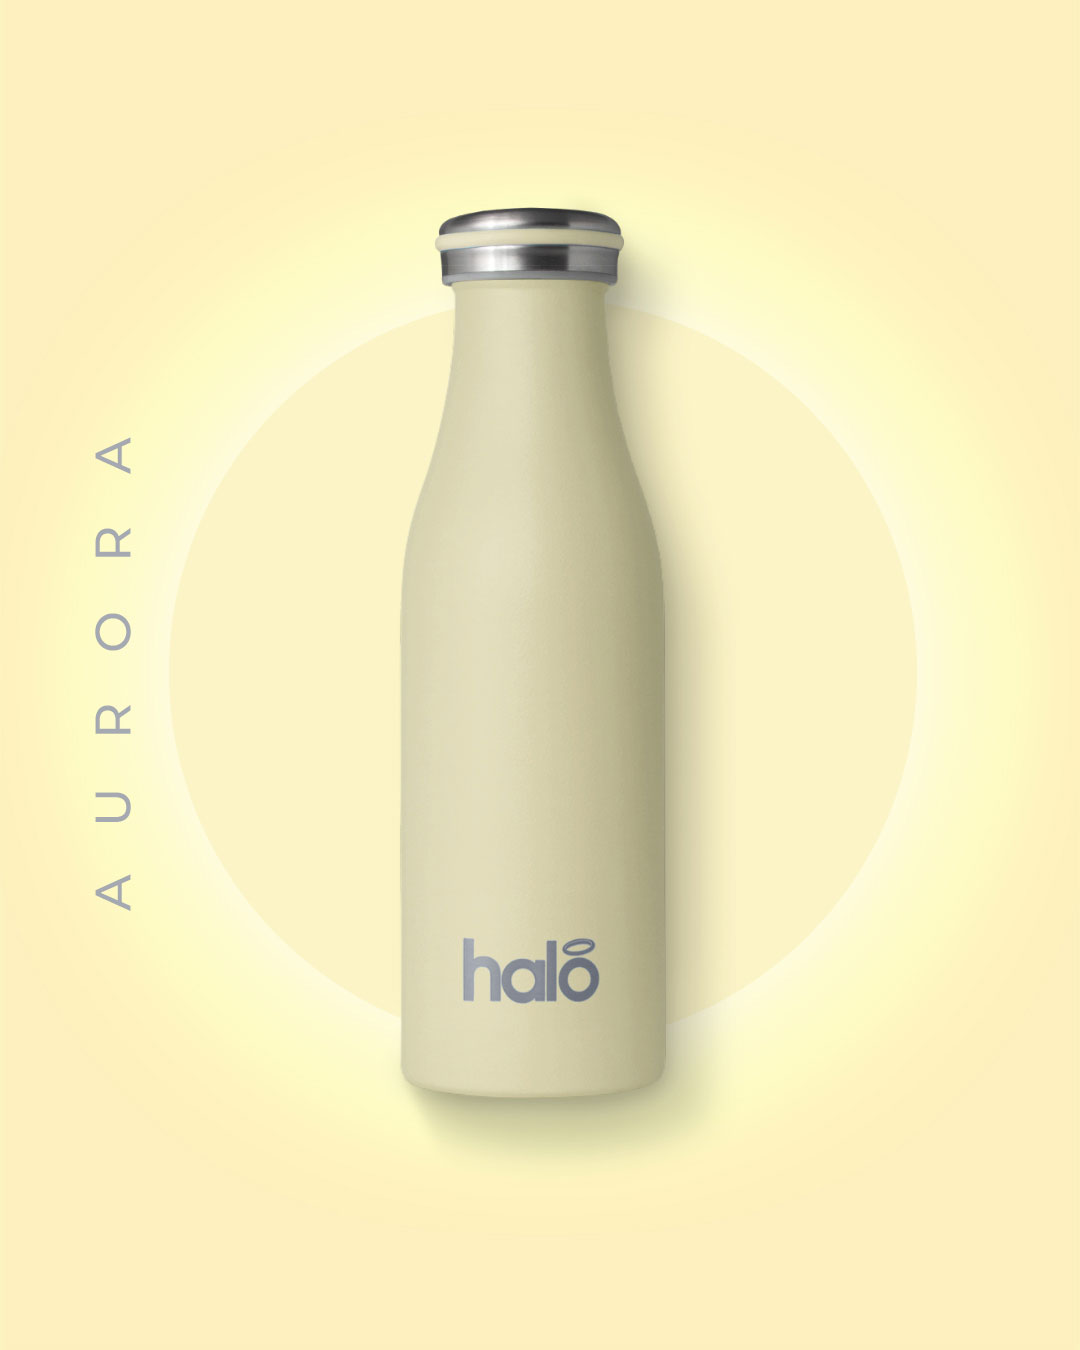 Halo Bottle 500ml yellow reusable water bottle with aurora.